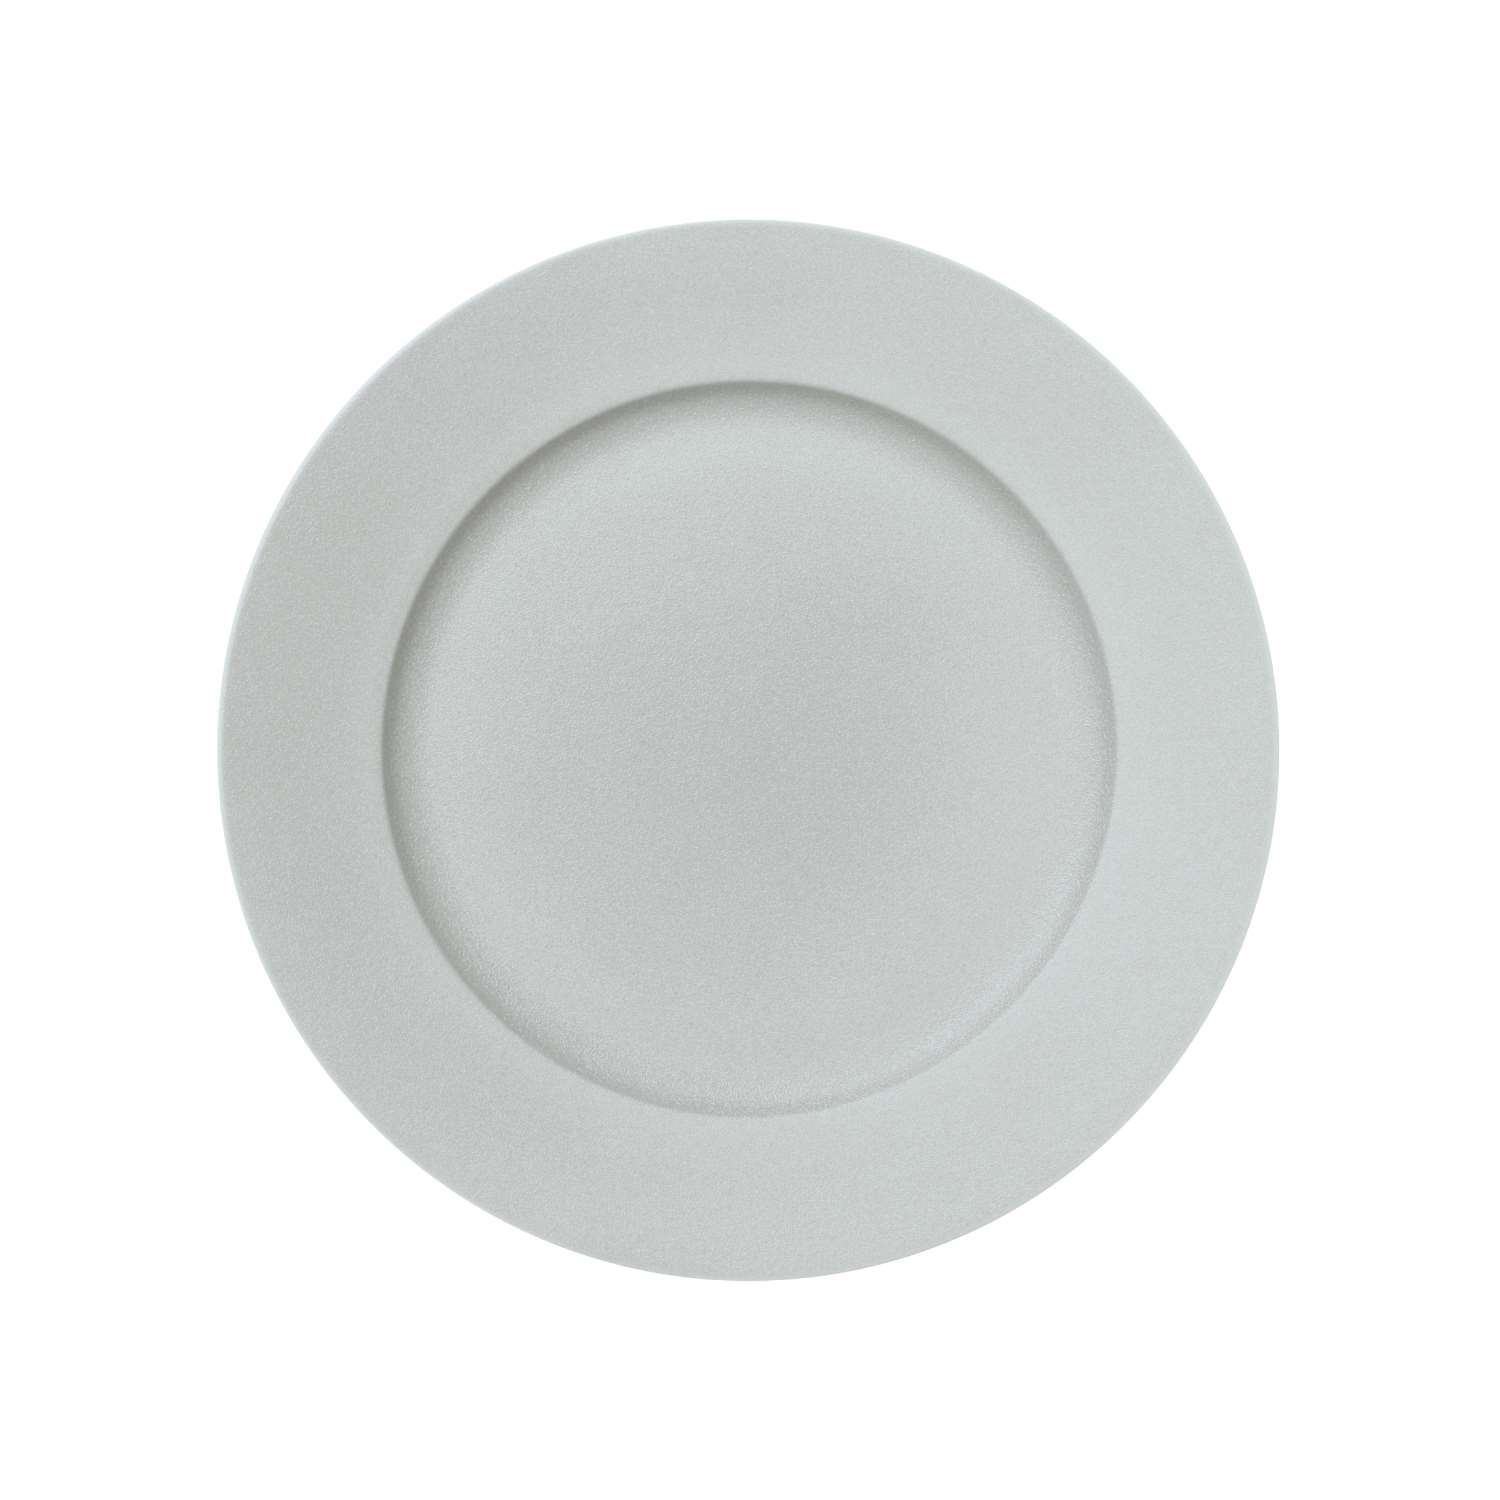 Baralee Light Grey Flat Plate 31 Cm